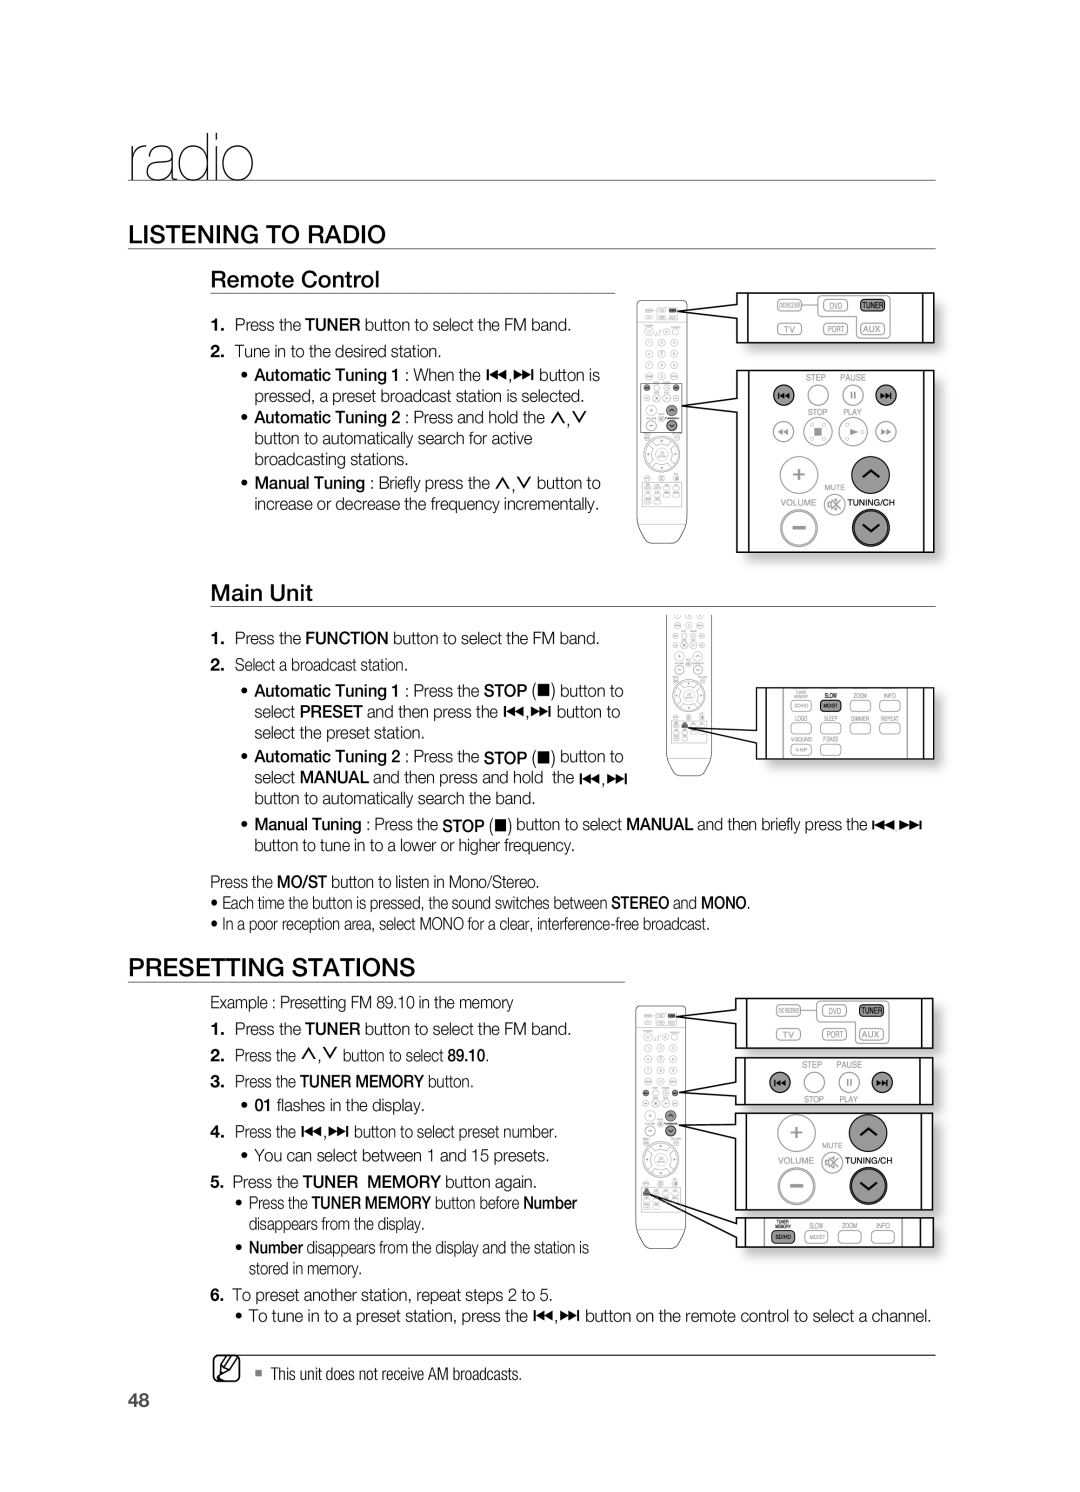 Samsung HT-A100 user manual radio, lISTENINg TO rADIO, PrESETTINg STATIONS, remote Control, Main Unit 